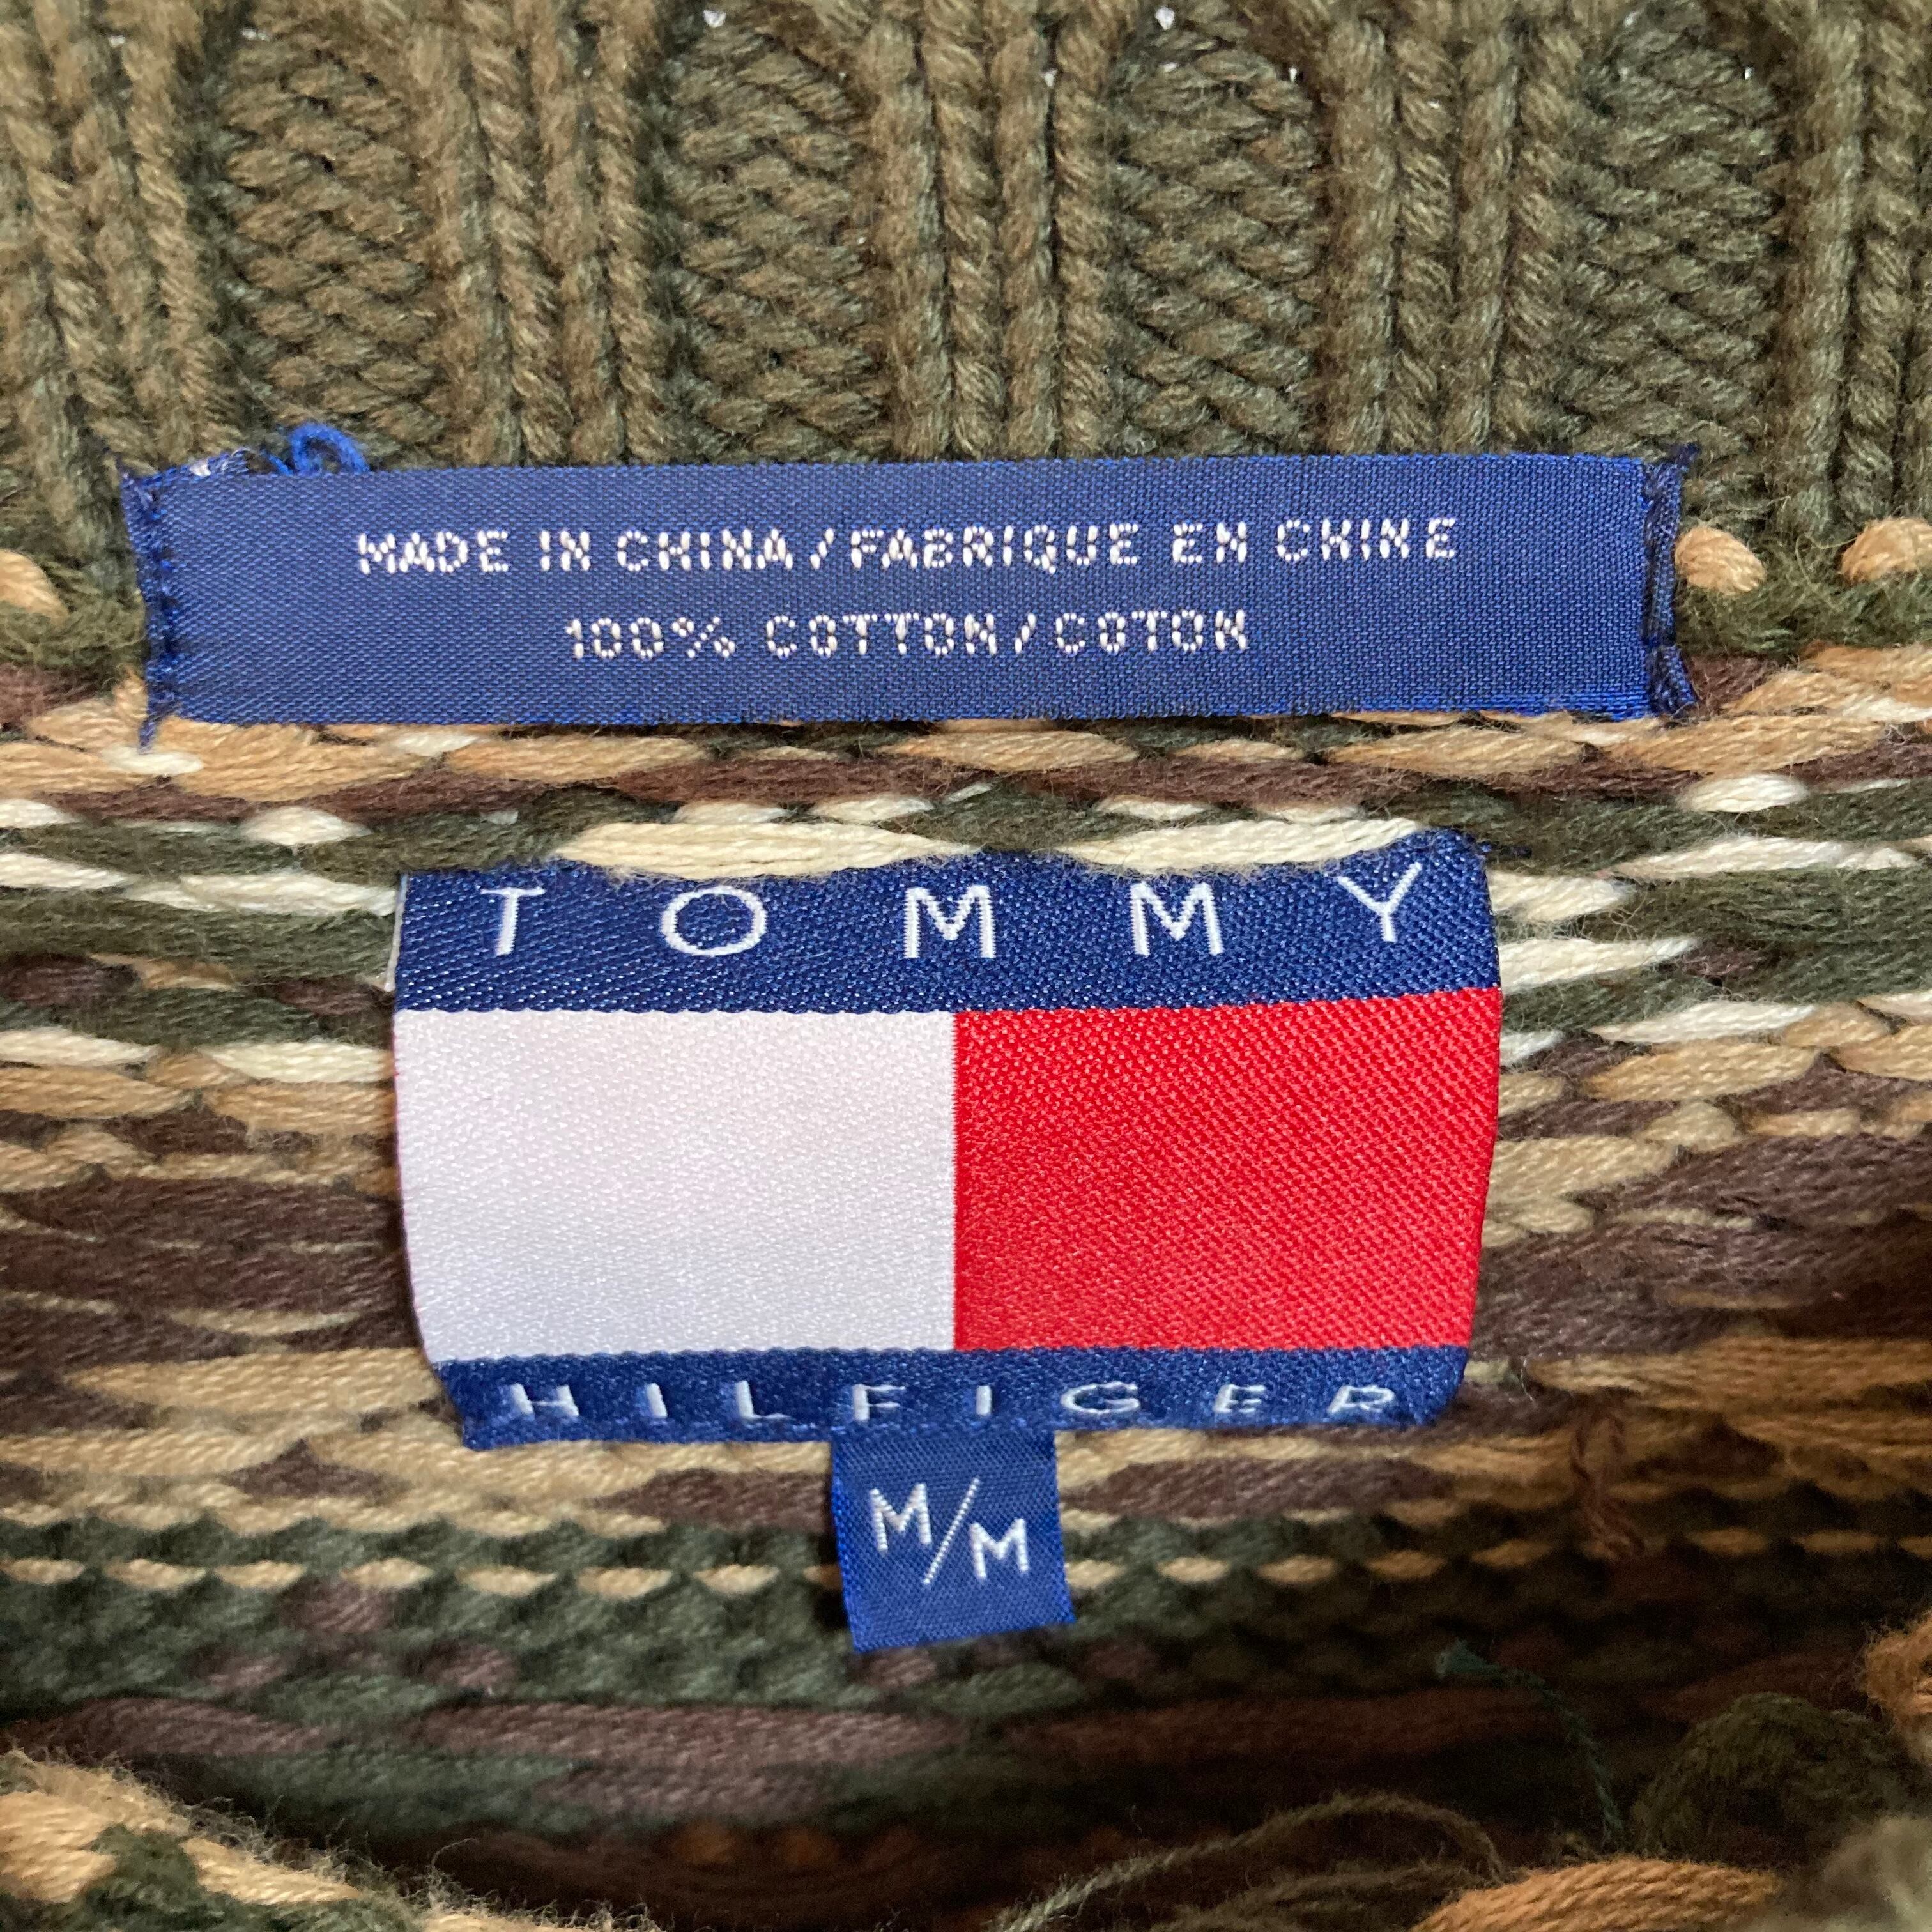 【TOMMY HILFIGER】Knit L相当 “OLD TOMMY” トミーヒルフィガー ニット 総柄ニットセーター 90s オールドトミー  旧タグ アメリカ USA 古着